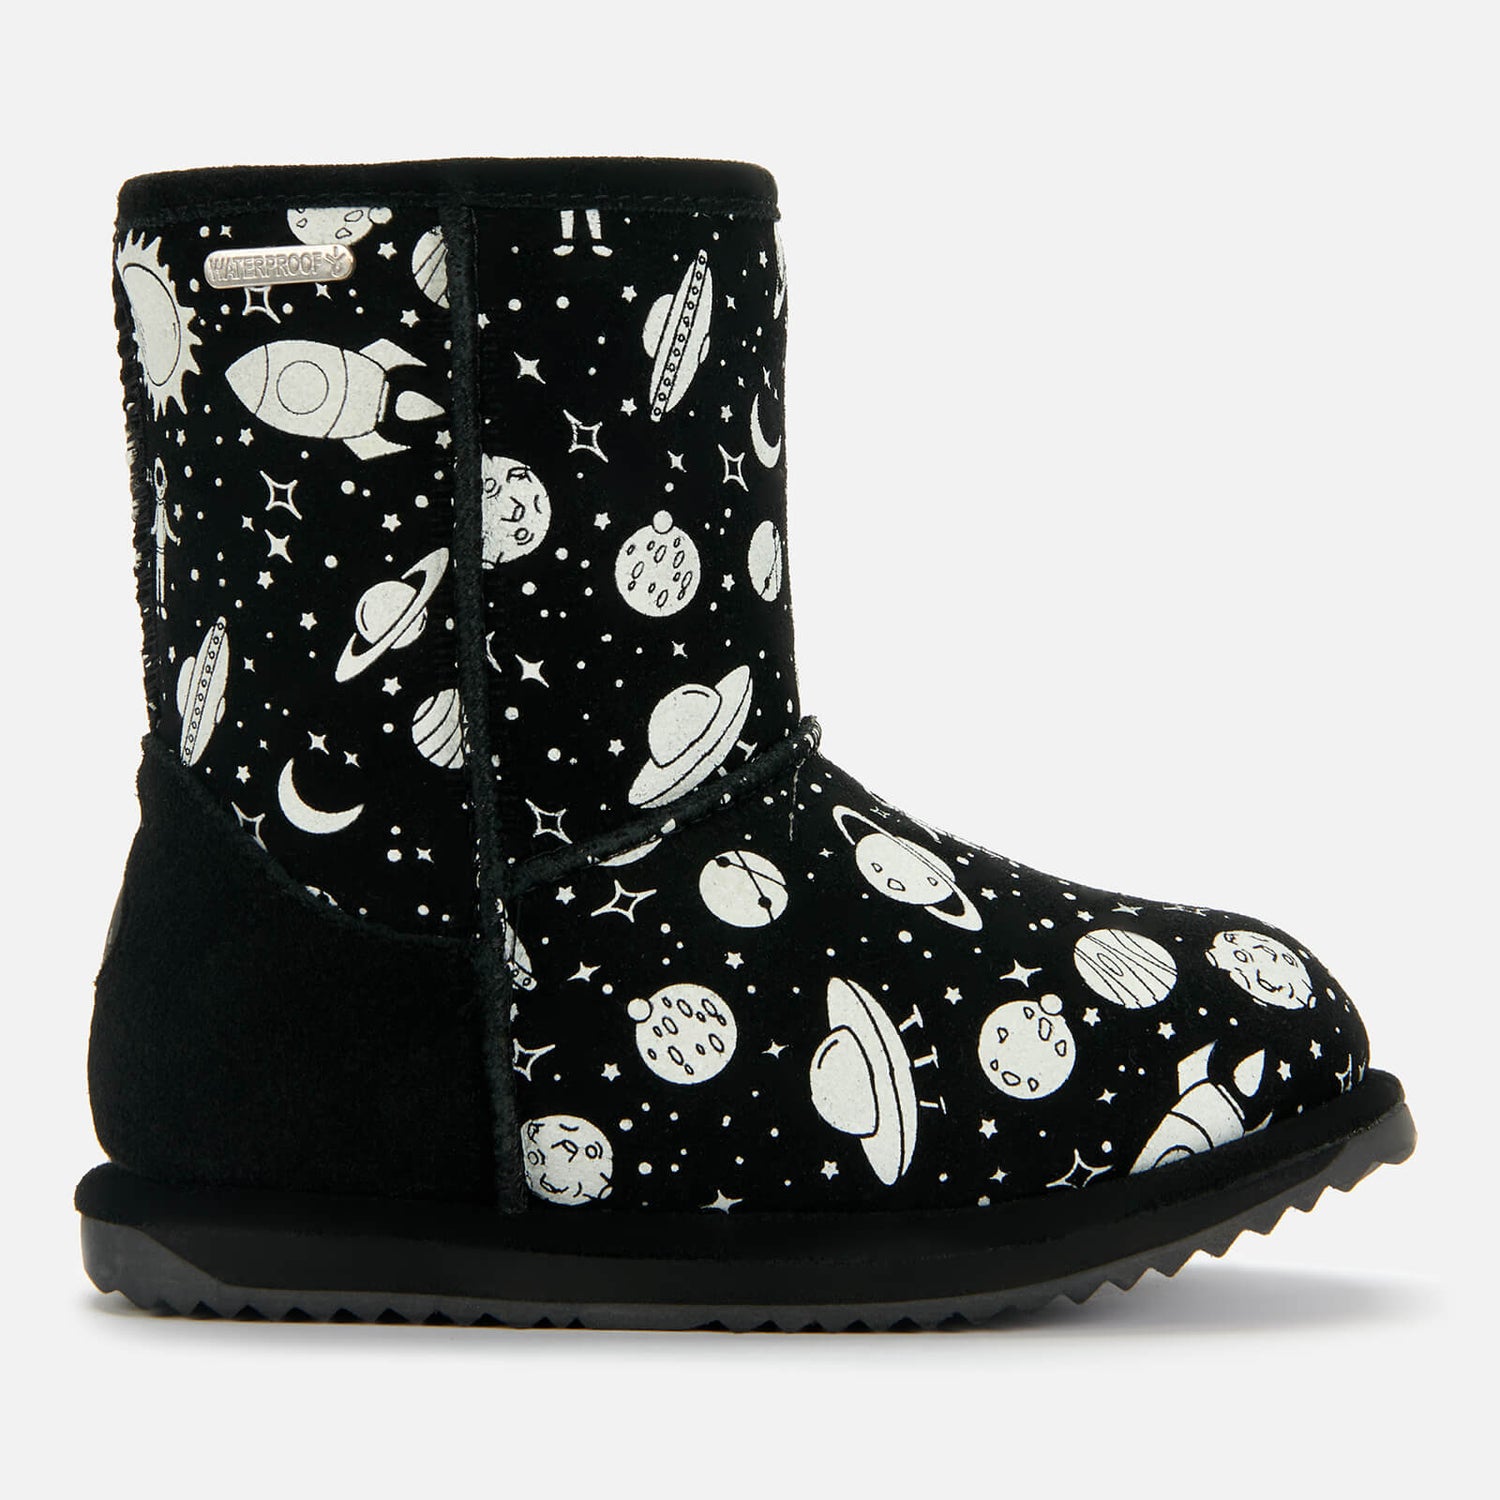 EMU Australia Kids' Outer Space Brumby Waterproof Boots - Black